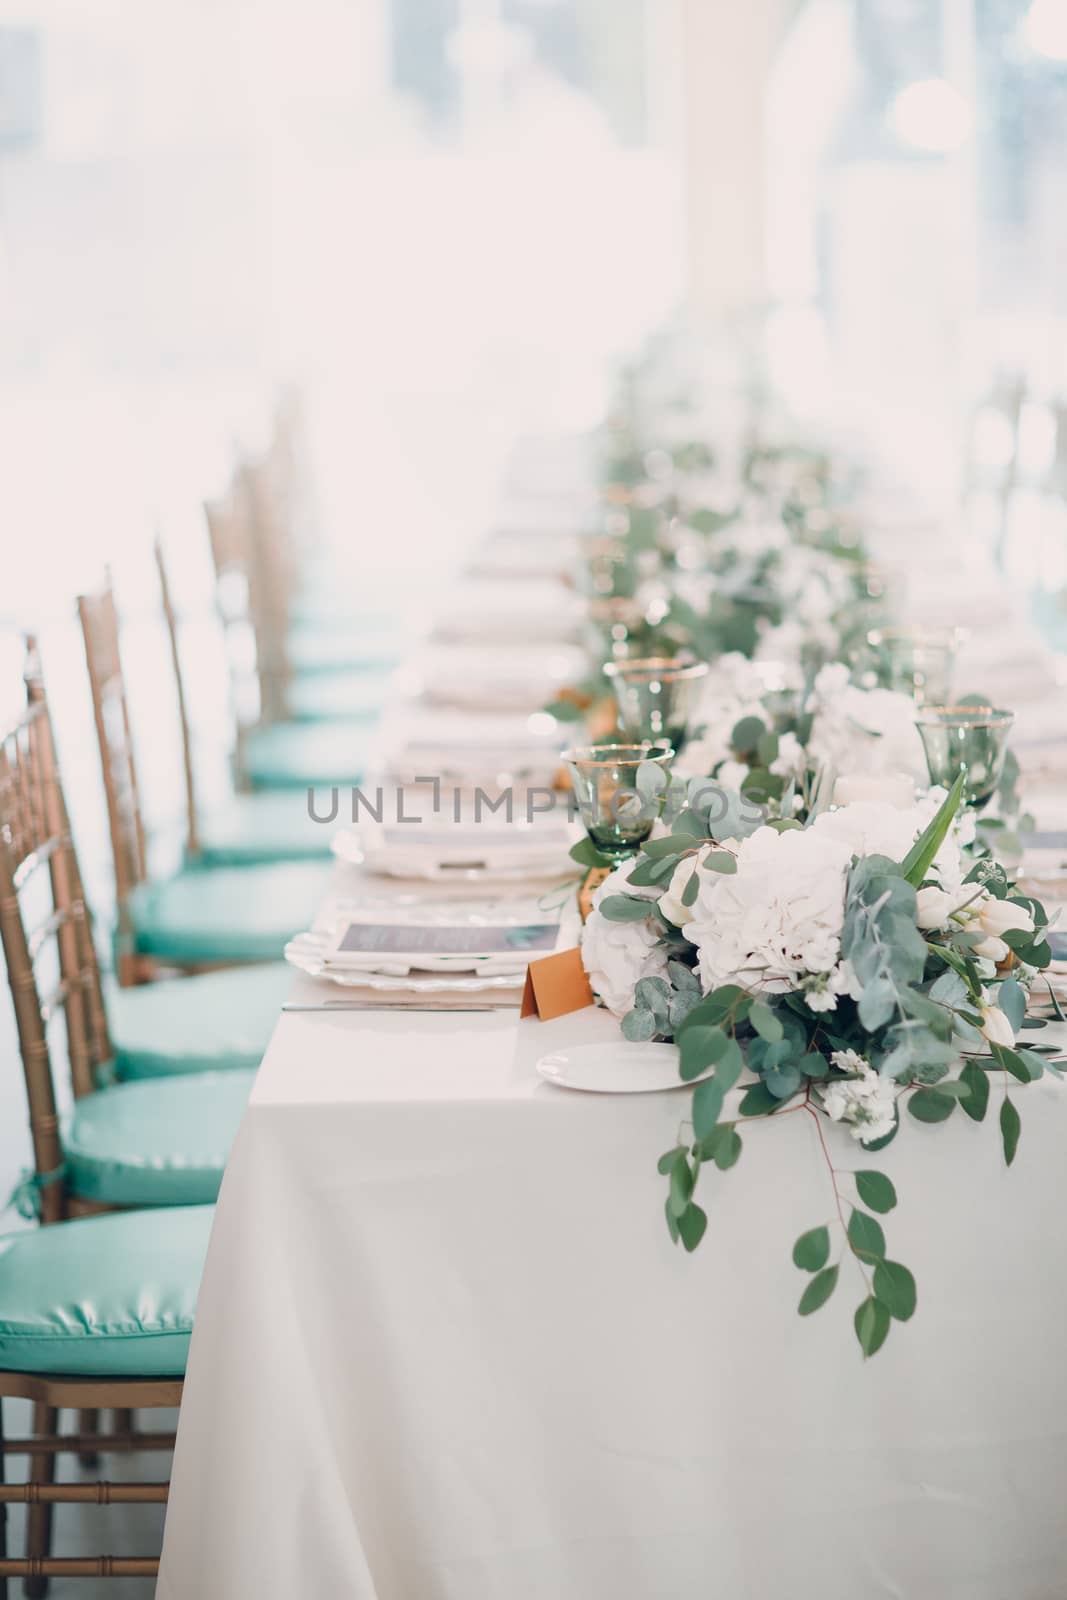 Wedding table decor by primipil